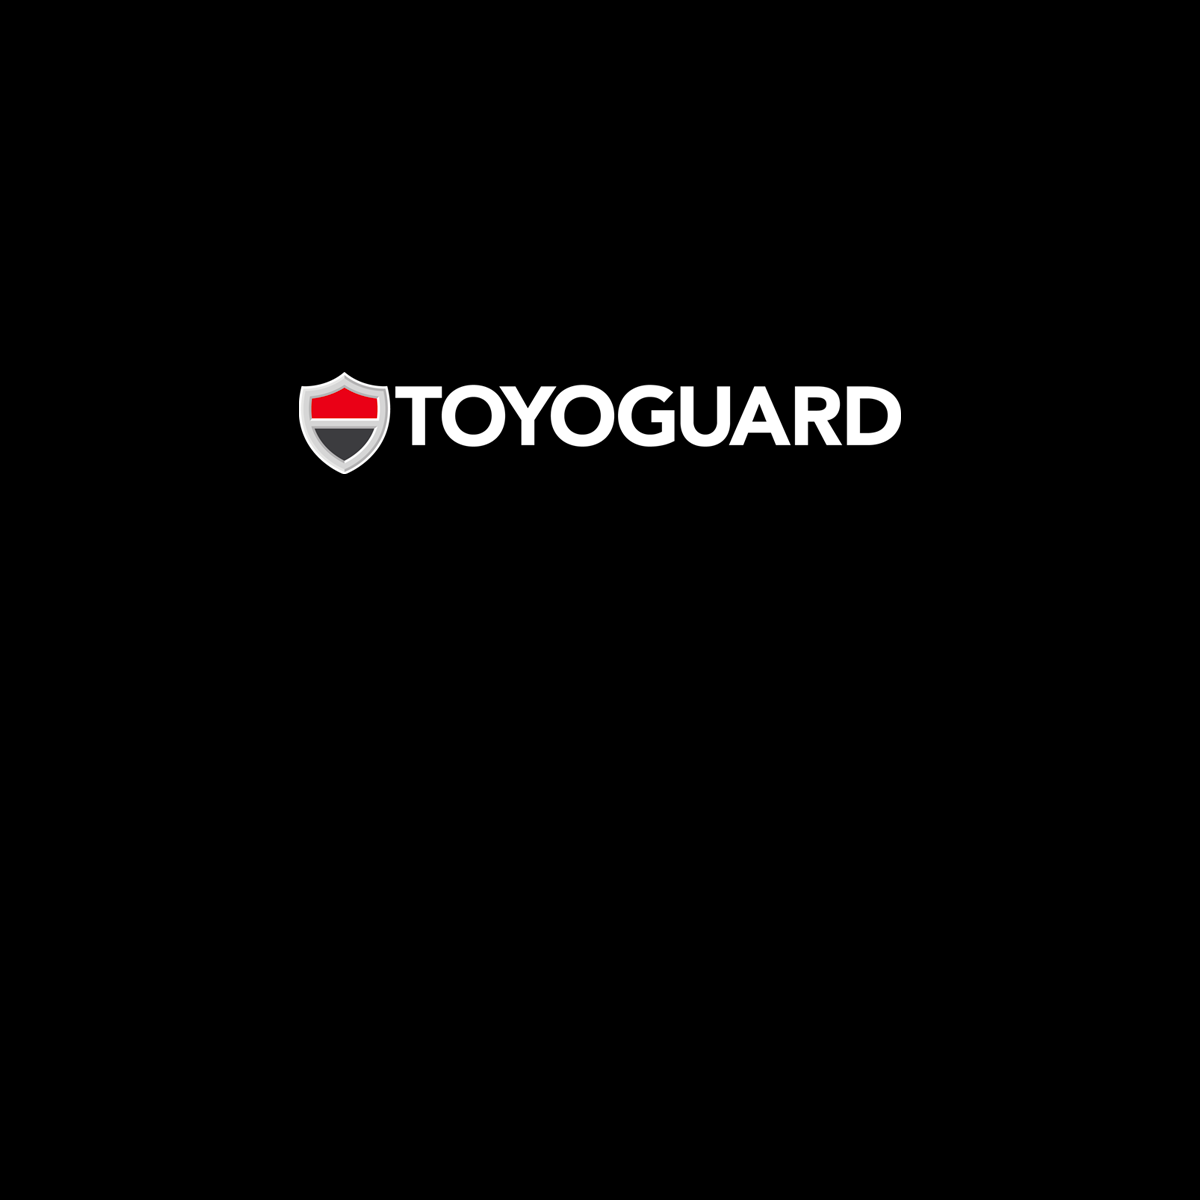 Toyoguard logo